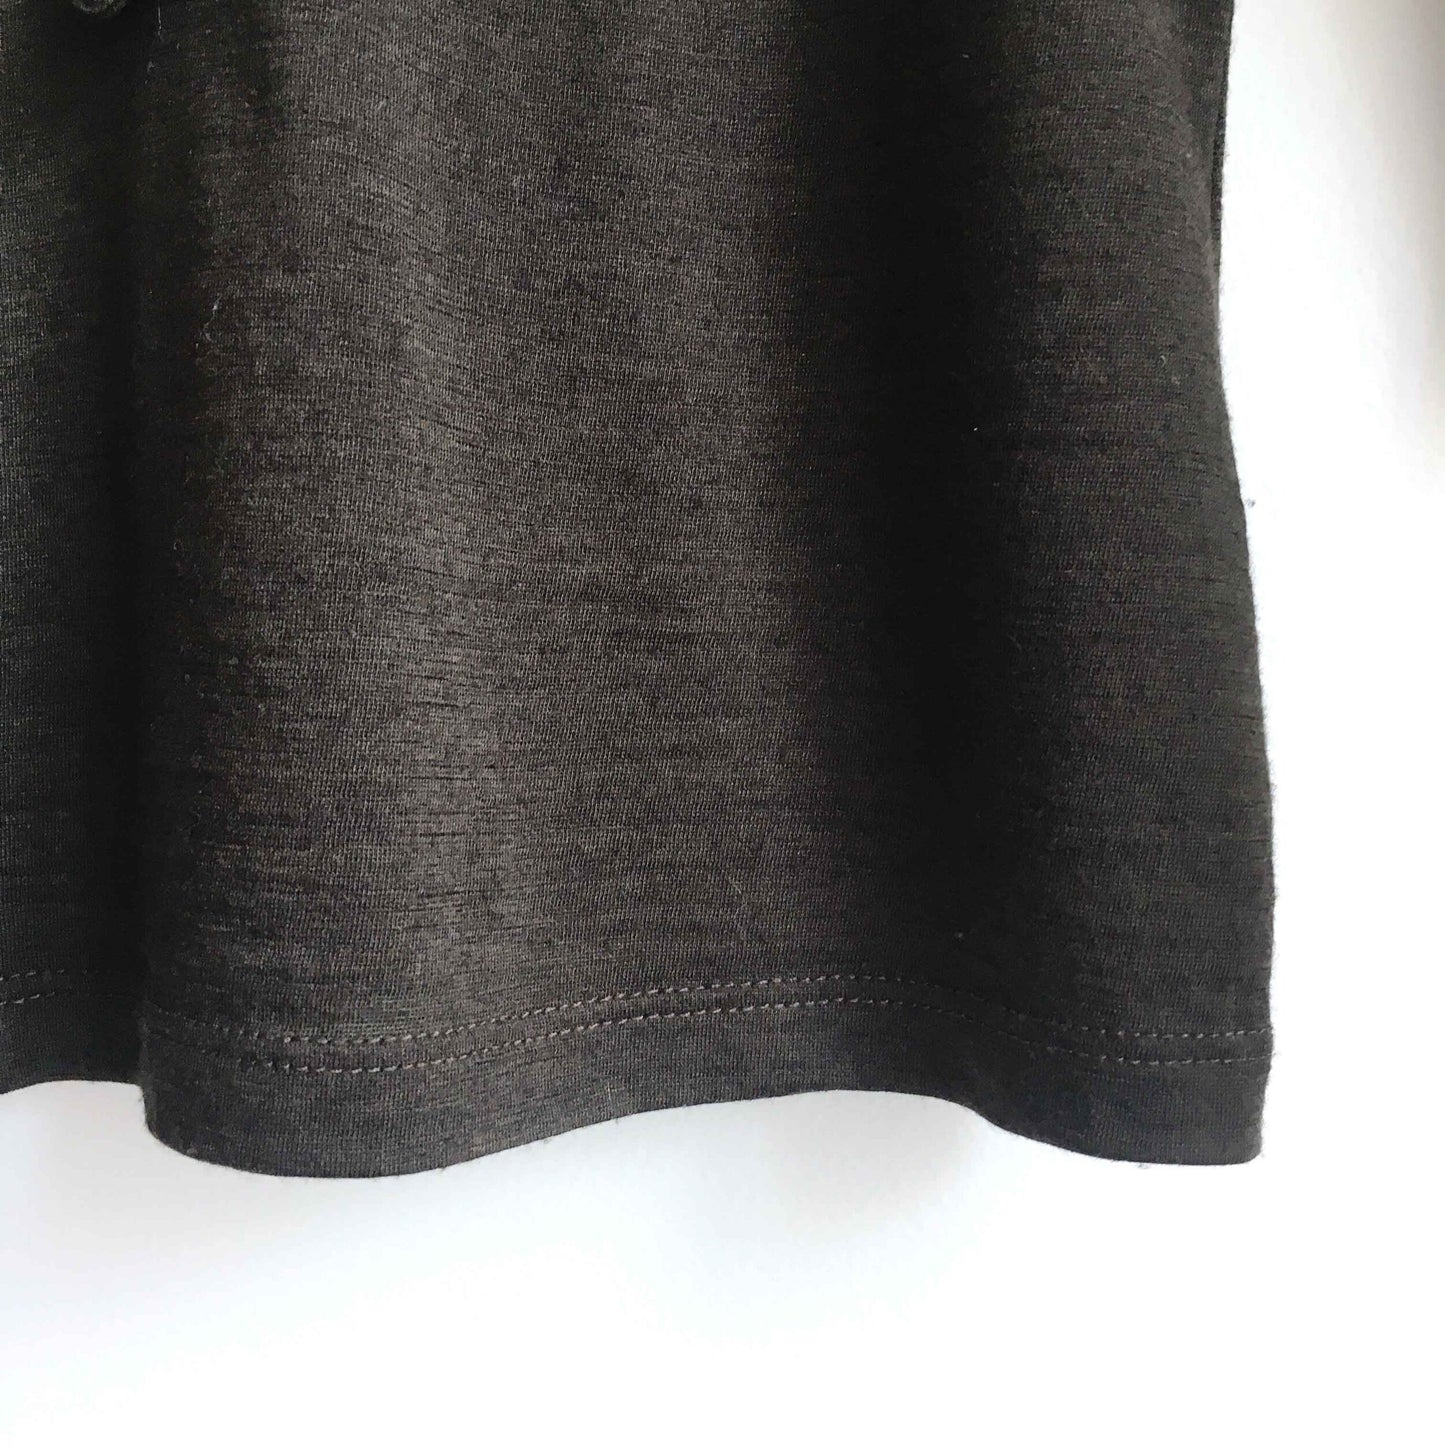 Max Mara wool-silk collared shirt - size Small